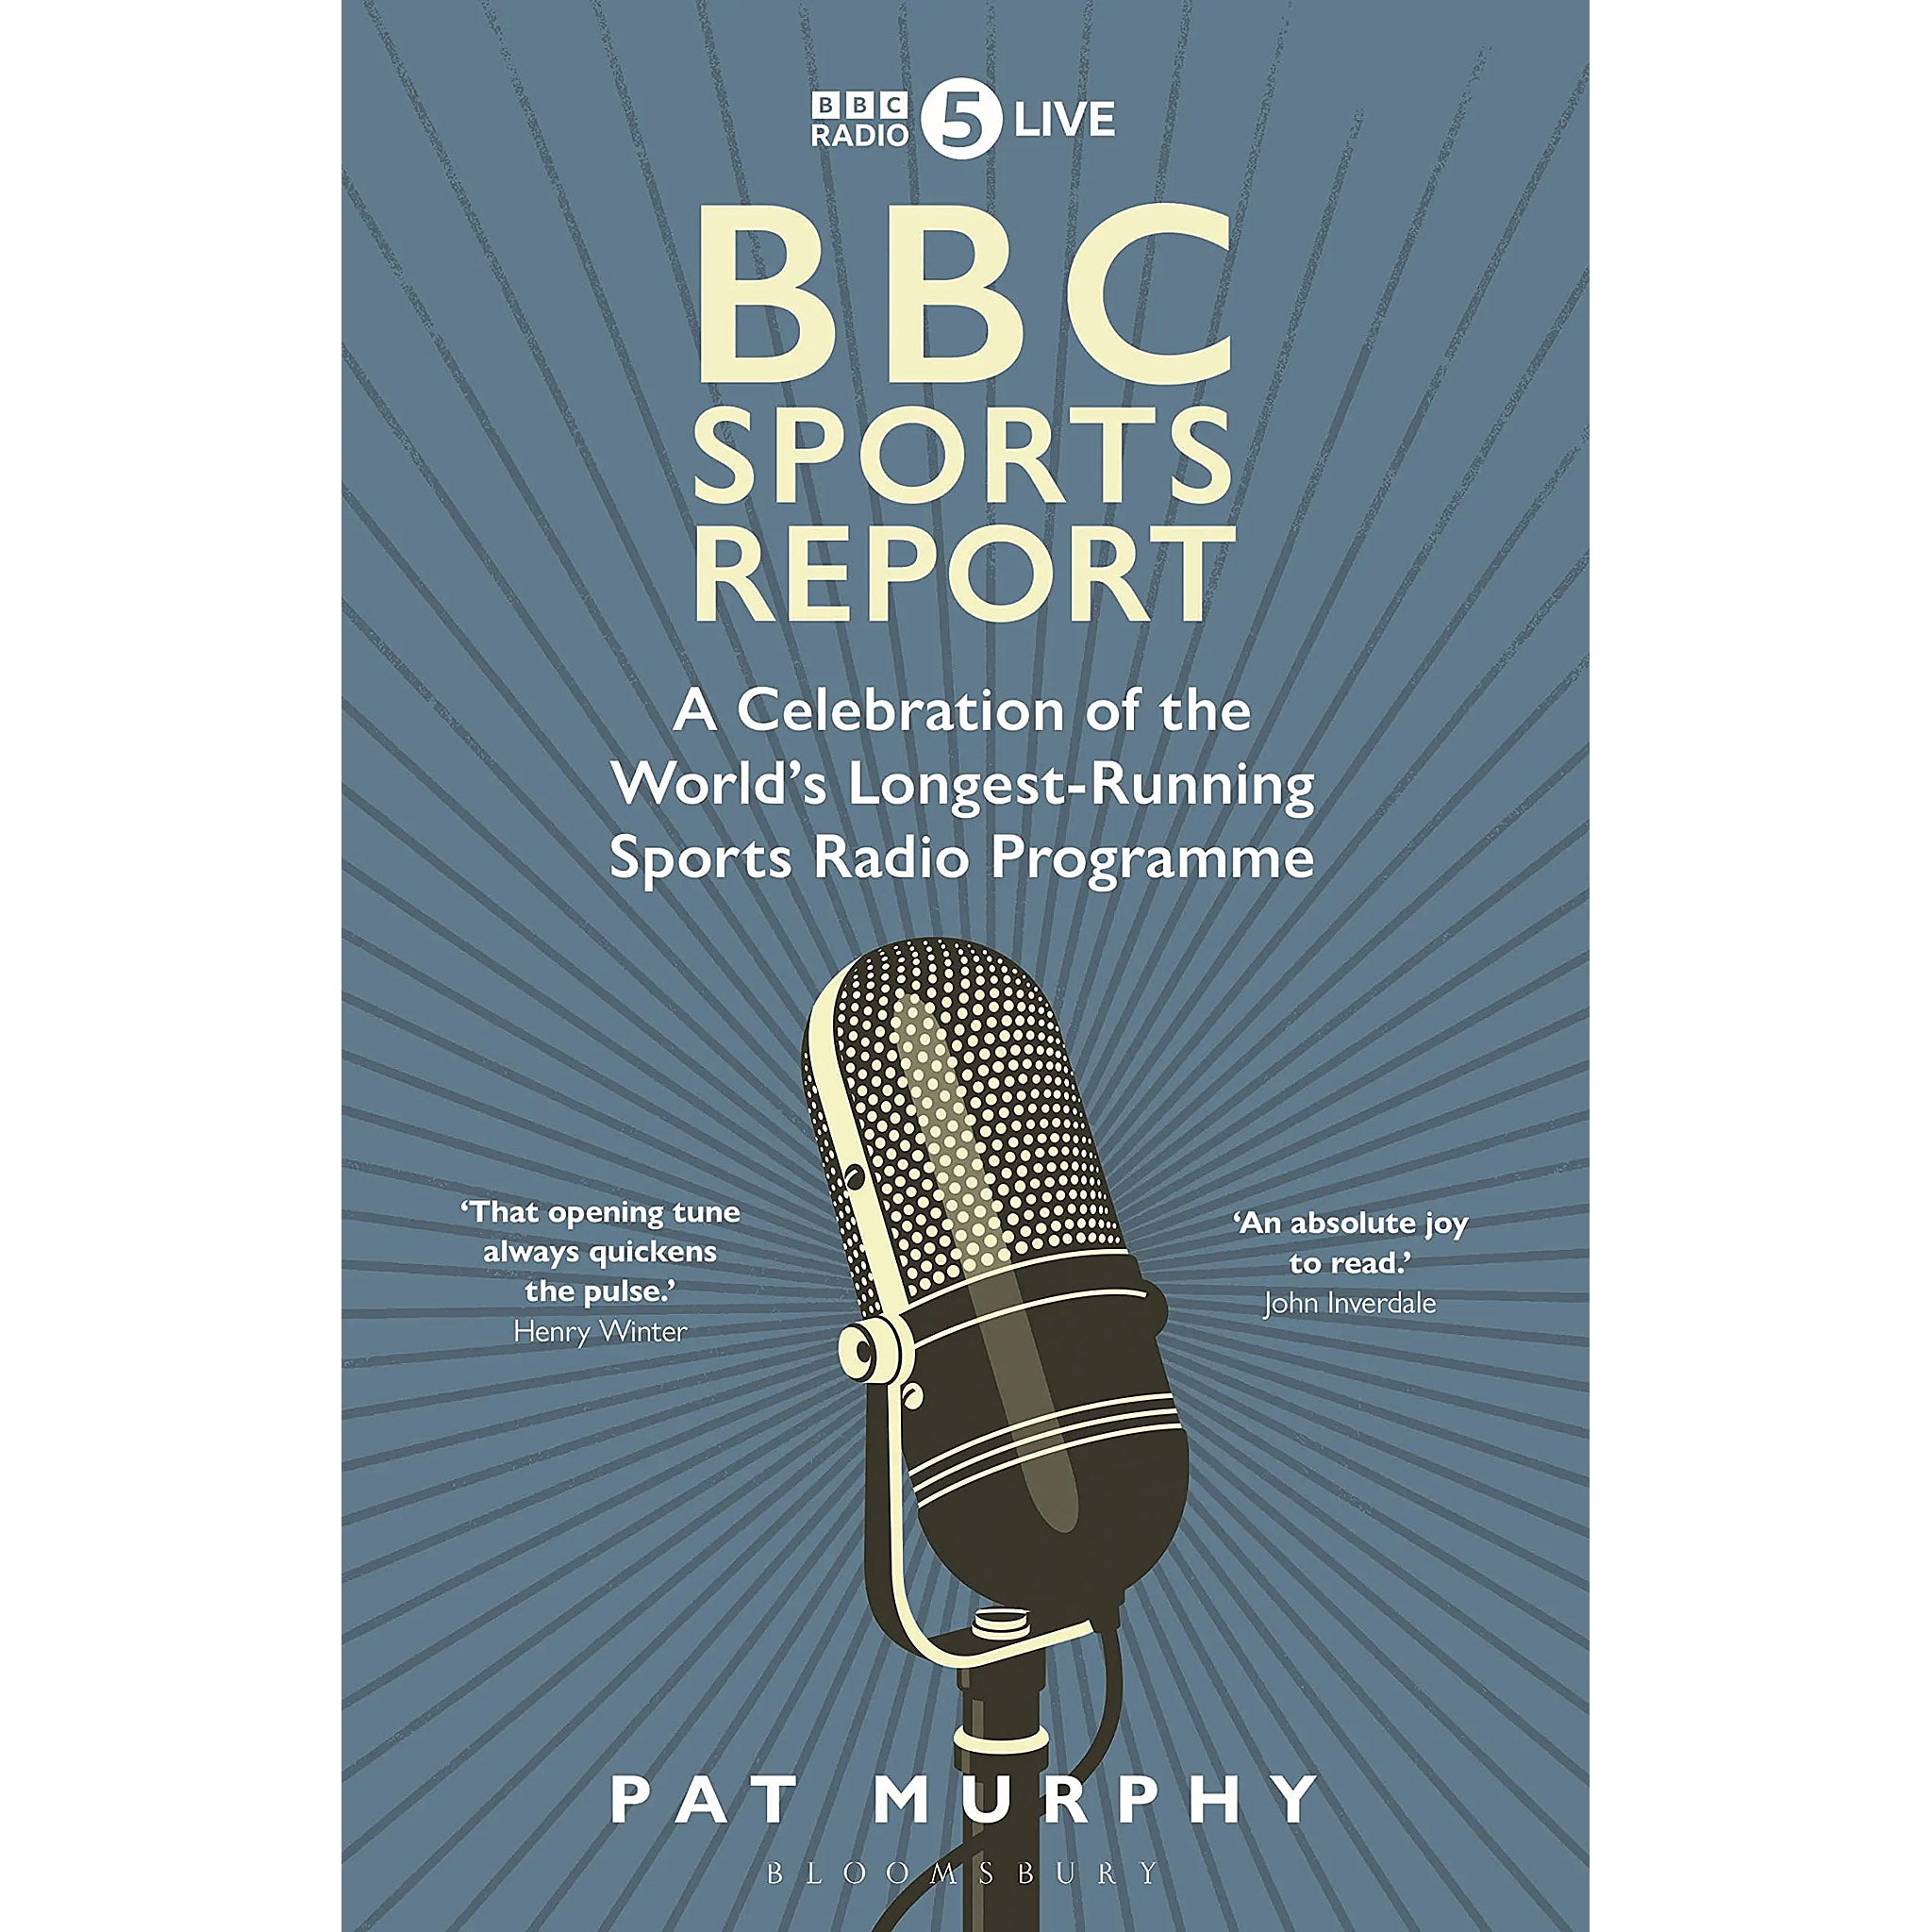 BBC Sports Report – A Celebration of the World's Longest-Running Sports Radio Programme